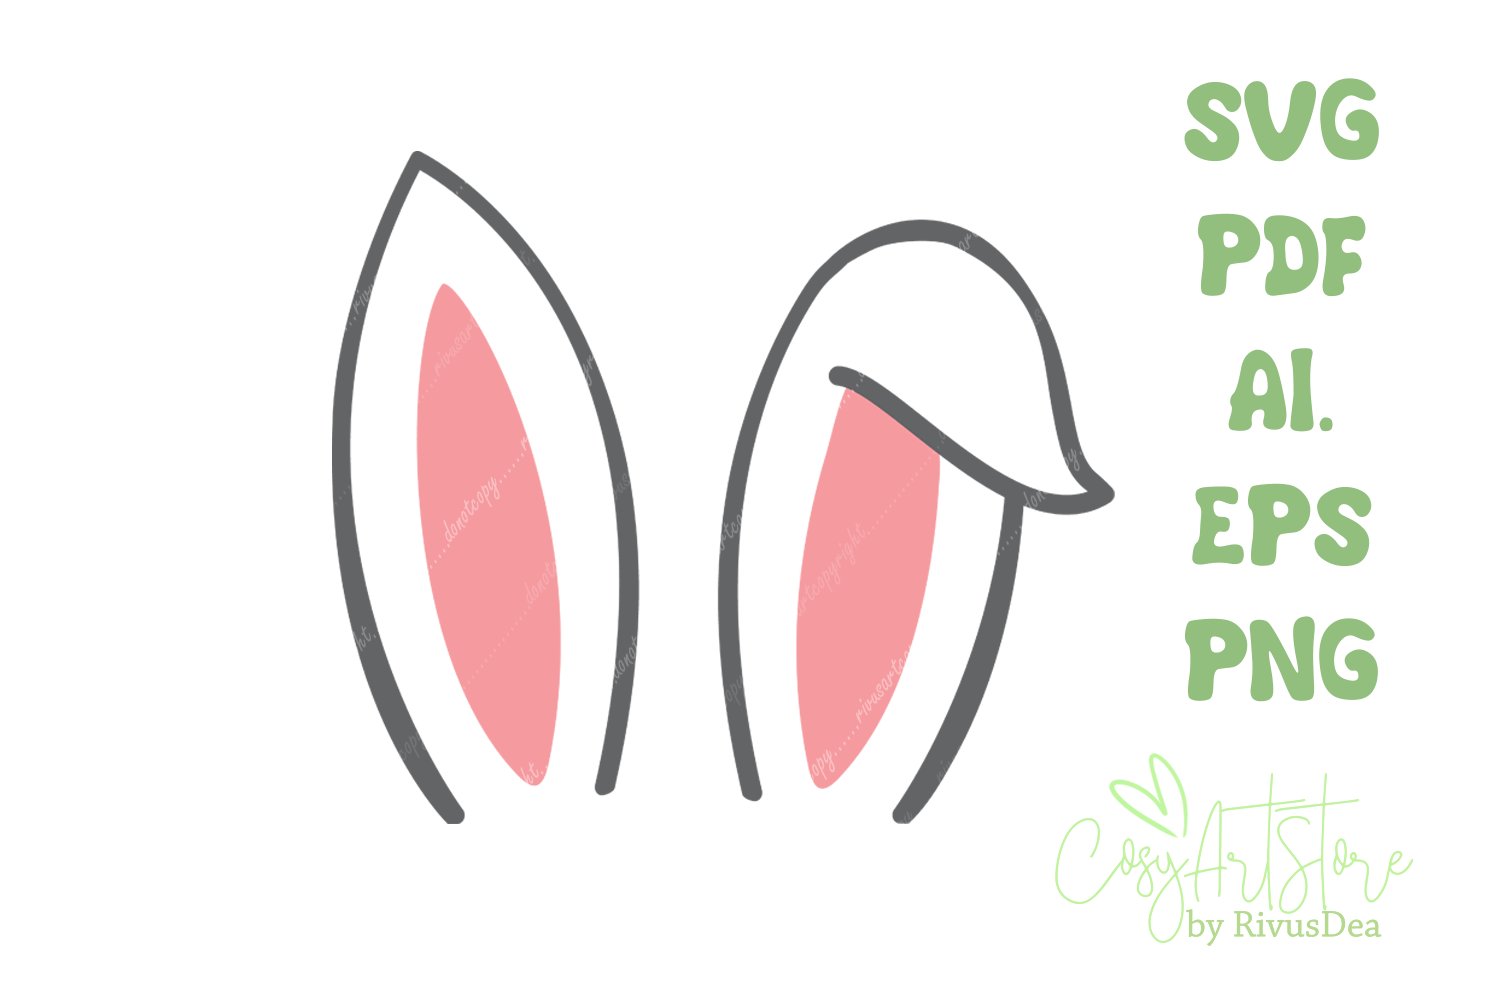 Bunny ears SVG download. Bunny ears by Ann on Dribbble